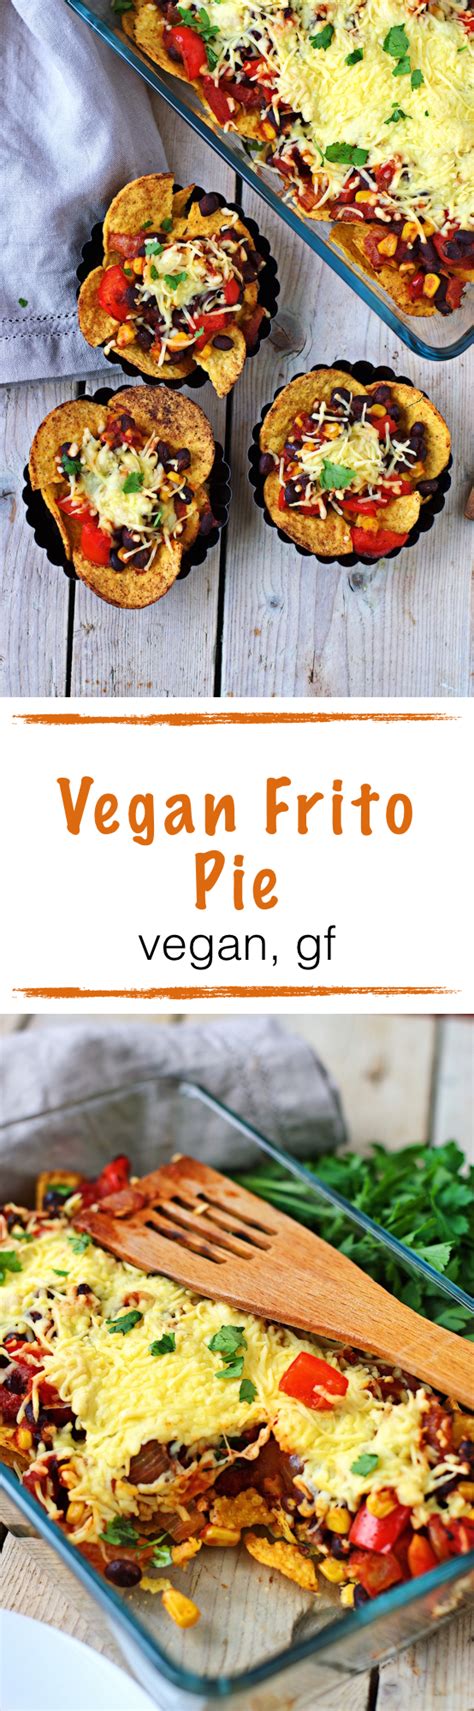 Vegan Frito Pie Recipe Vegan Recipes Vegan Main